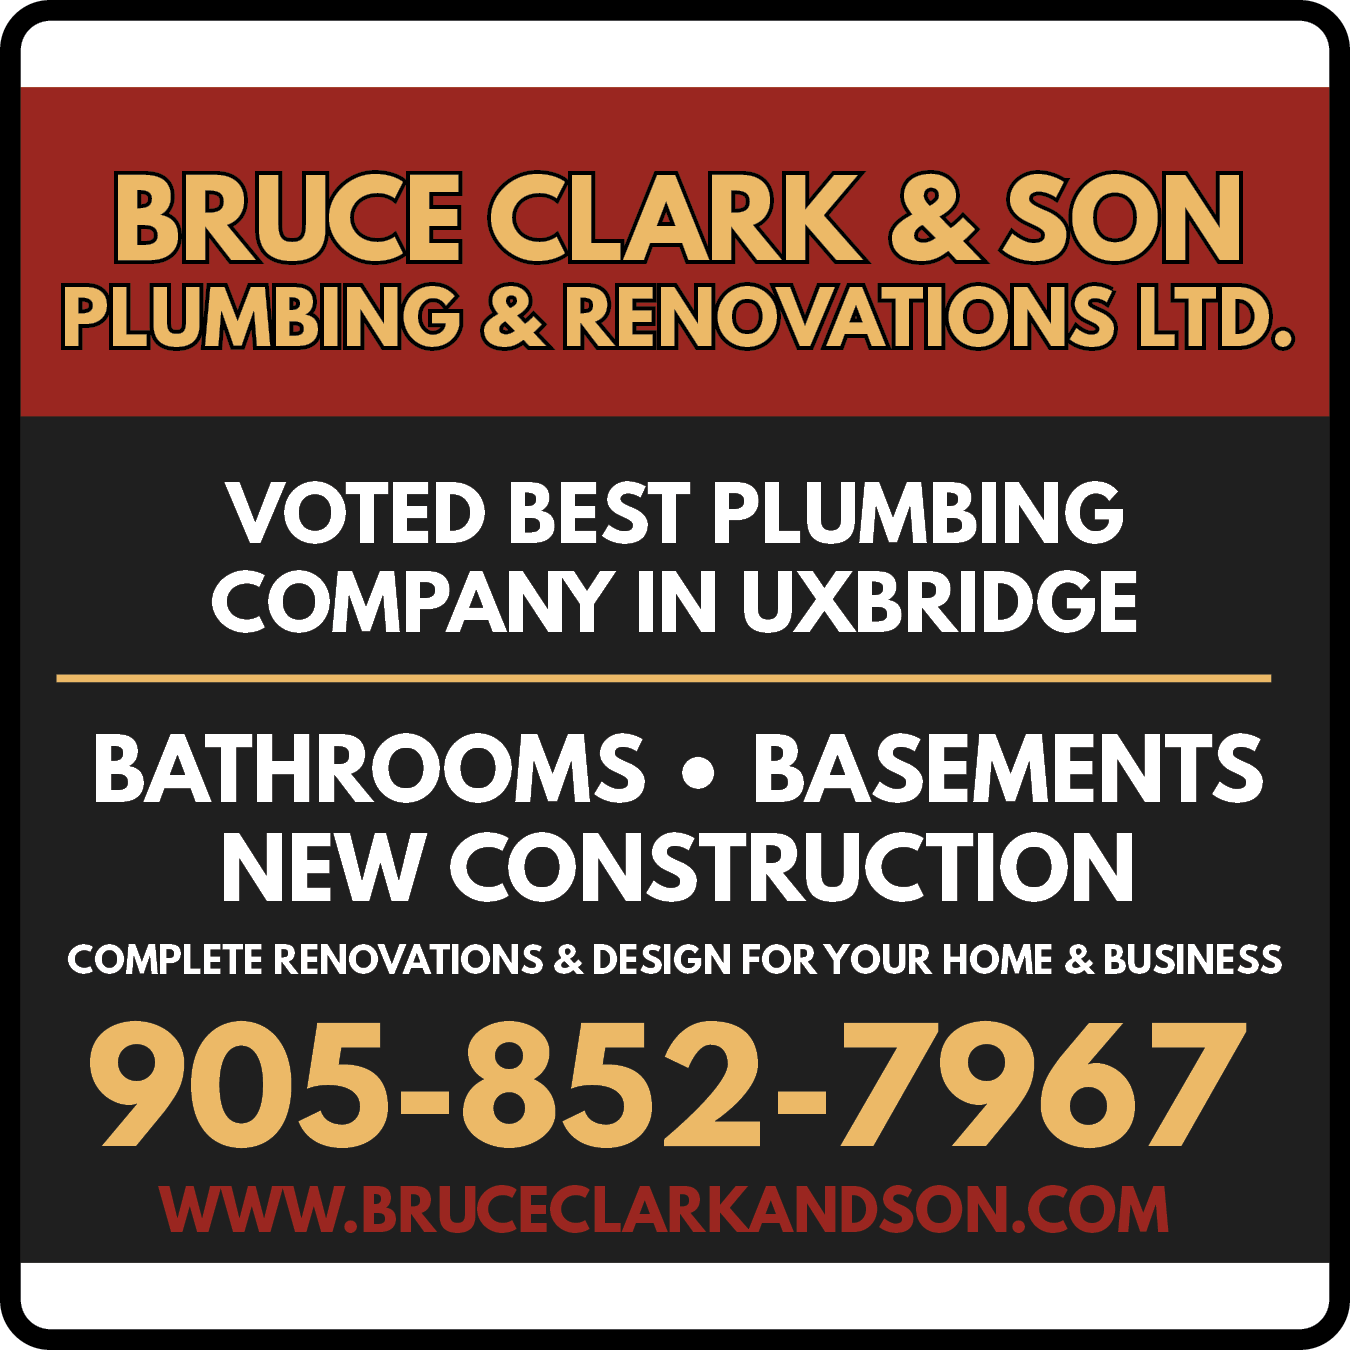 Bruce Clark & Sons Plumbing and Renovations Ltd.